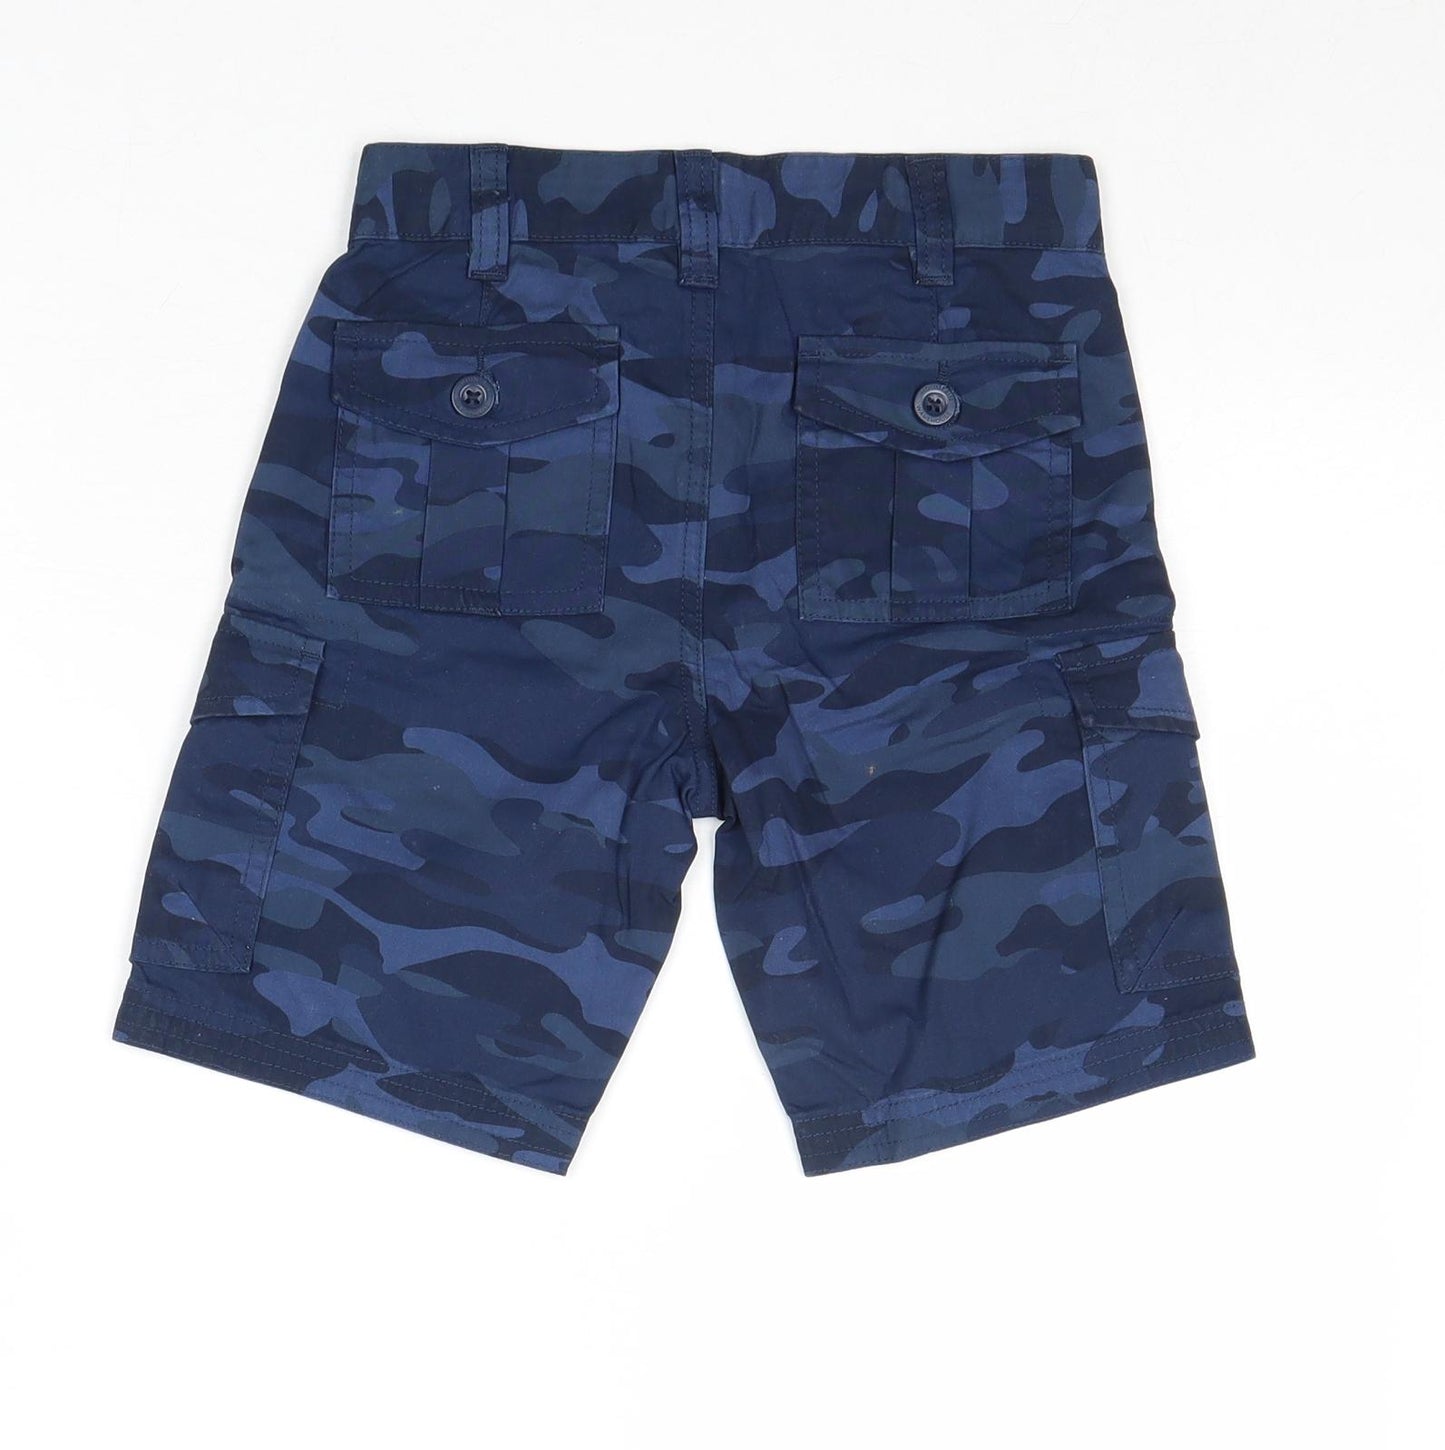 Mountain Warehouse Boys Blue Camouflage Cotton Cargo Shorts Size 5-6 Years Regular Buckle - Waist 24